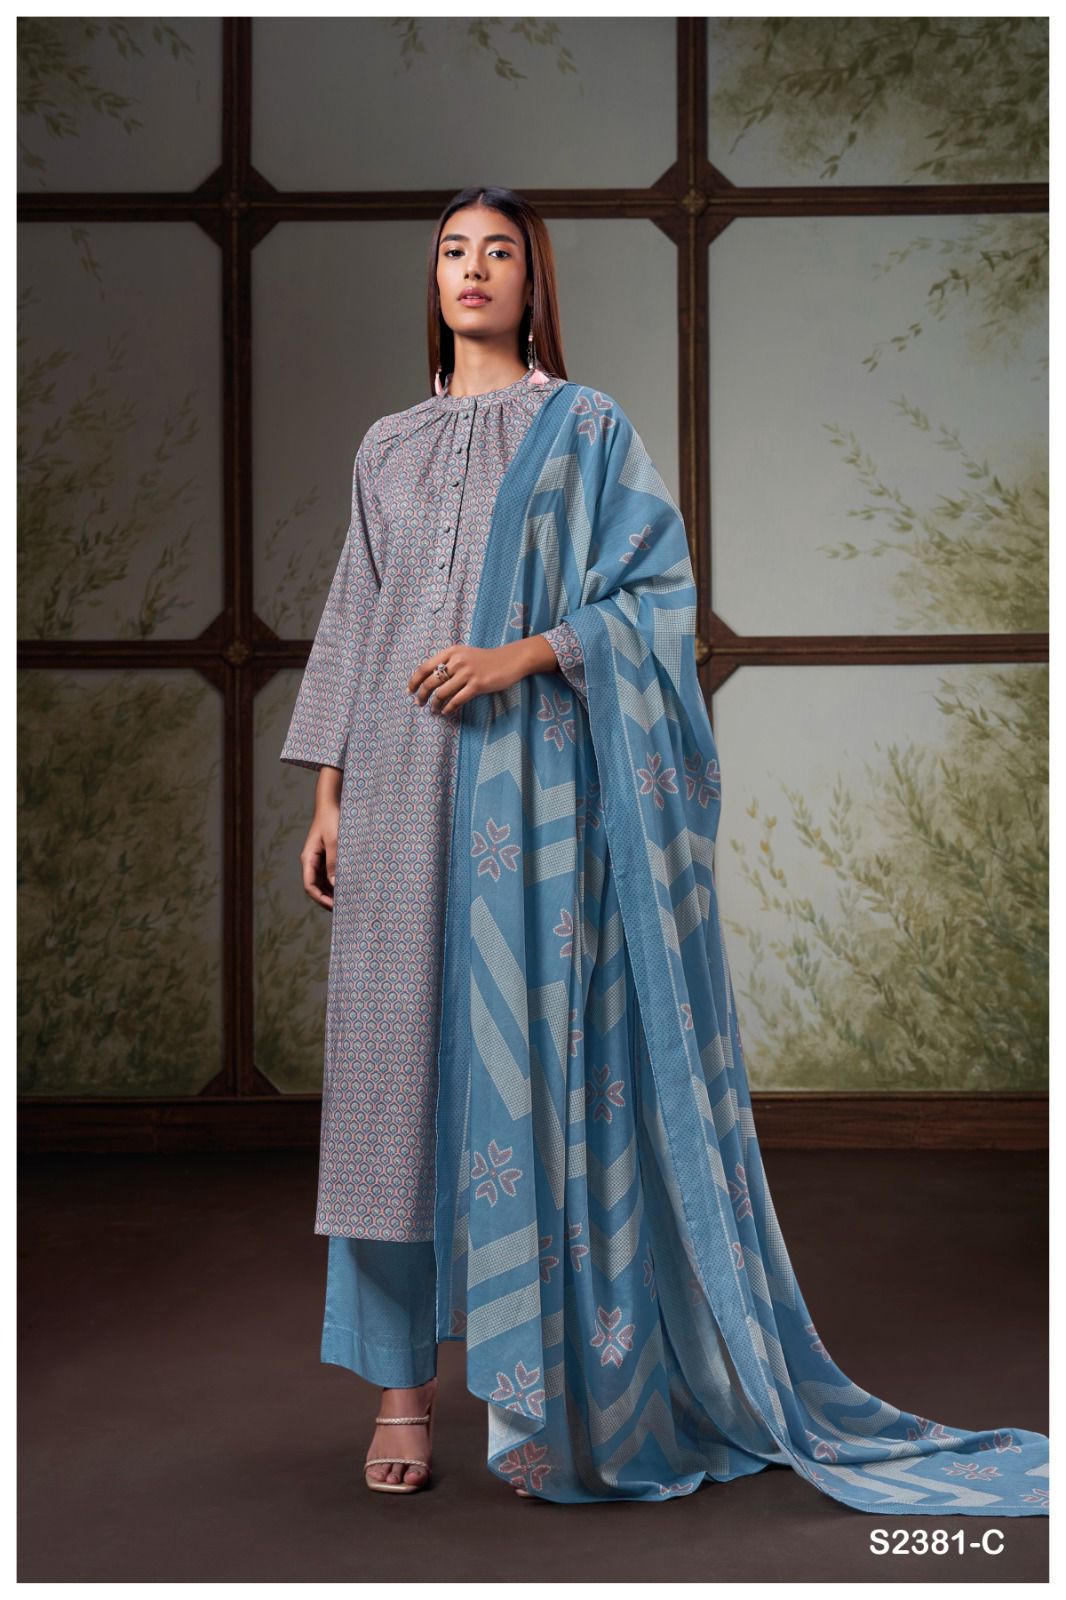 Ganga Harriet 2381D - Premium Cotton Printed Suit